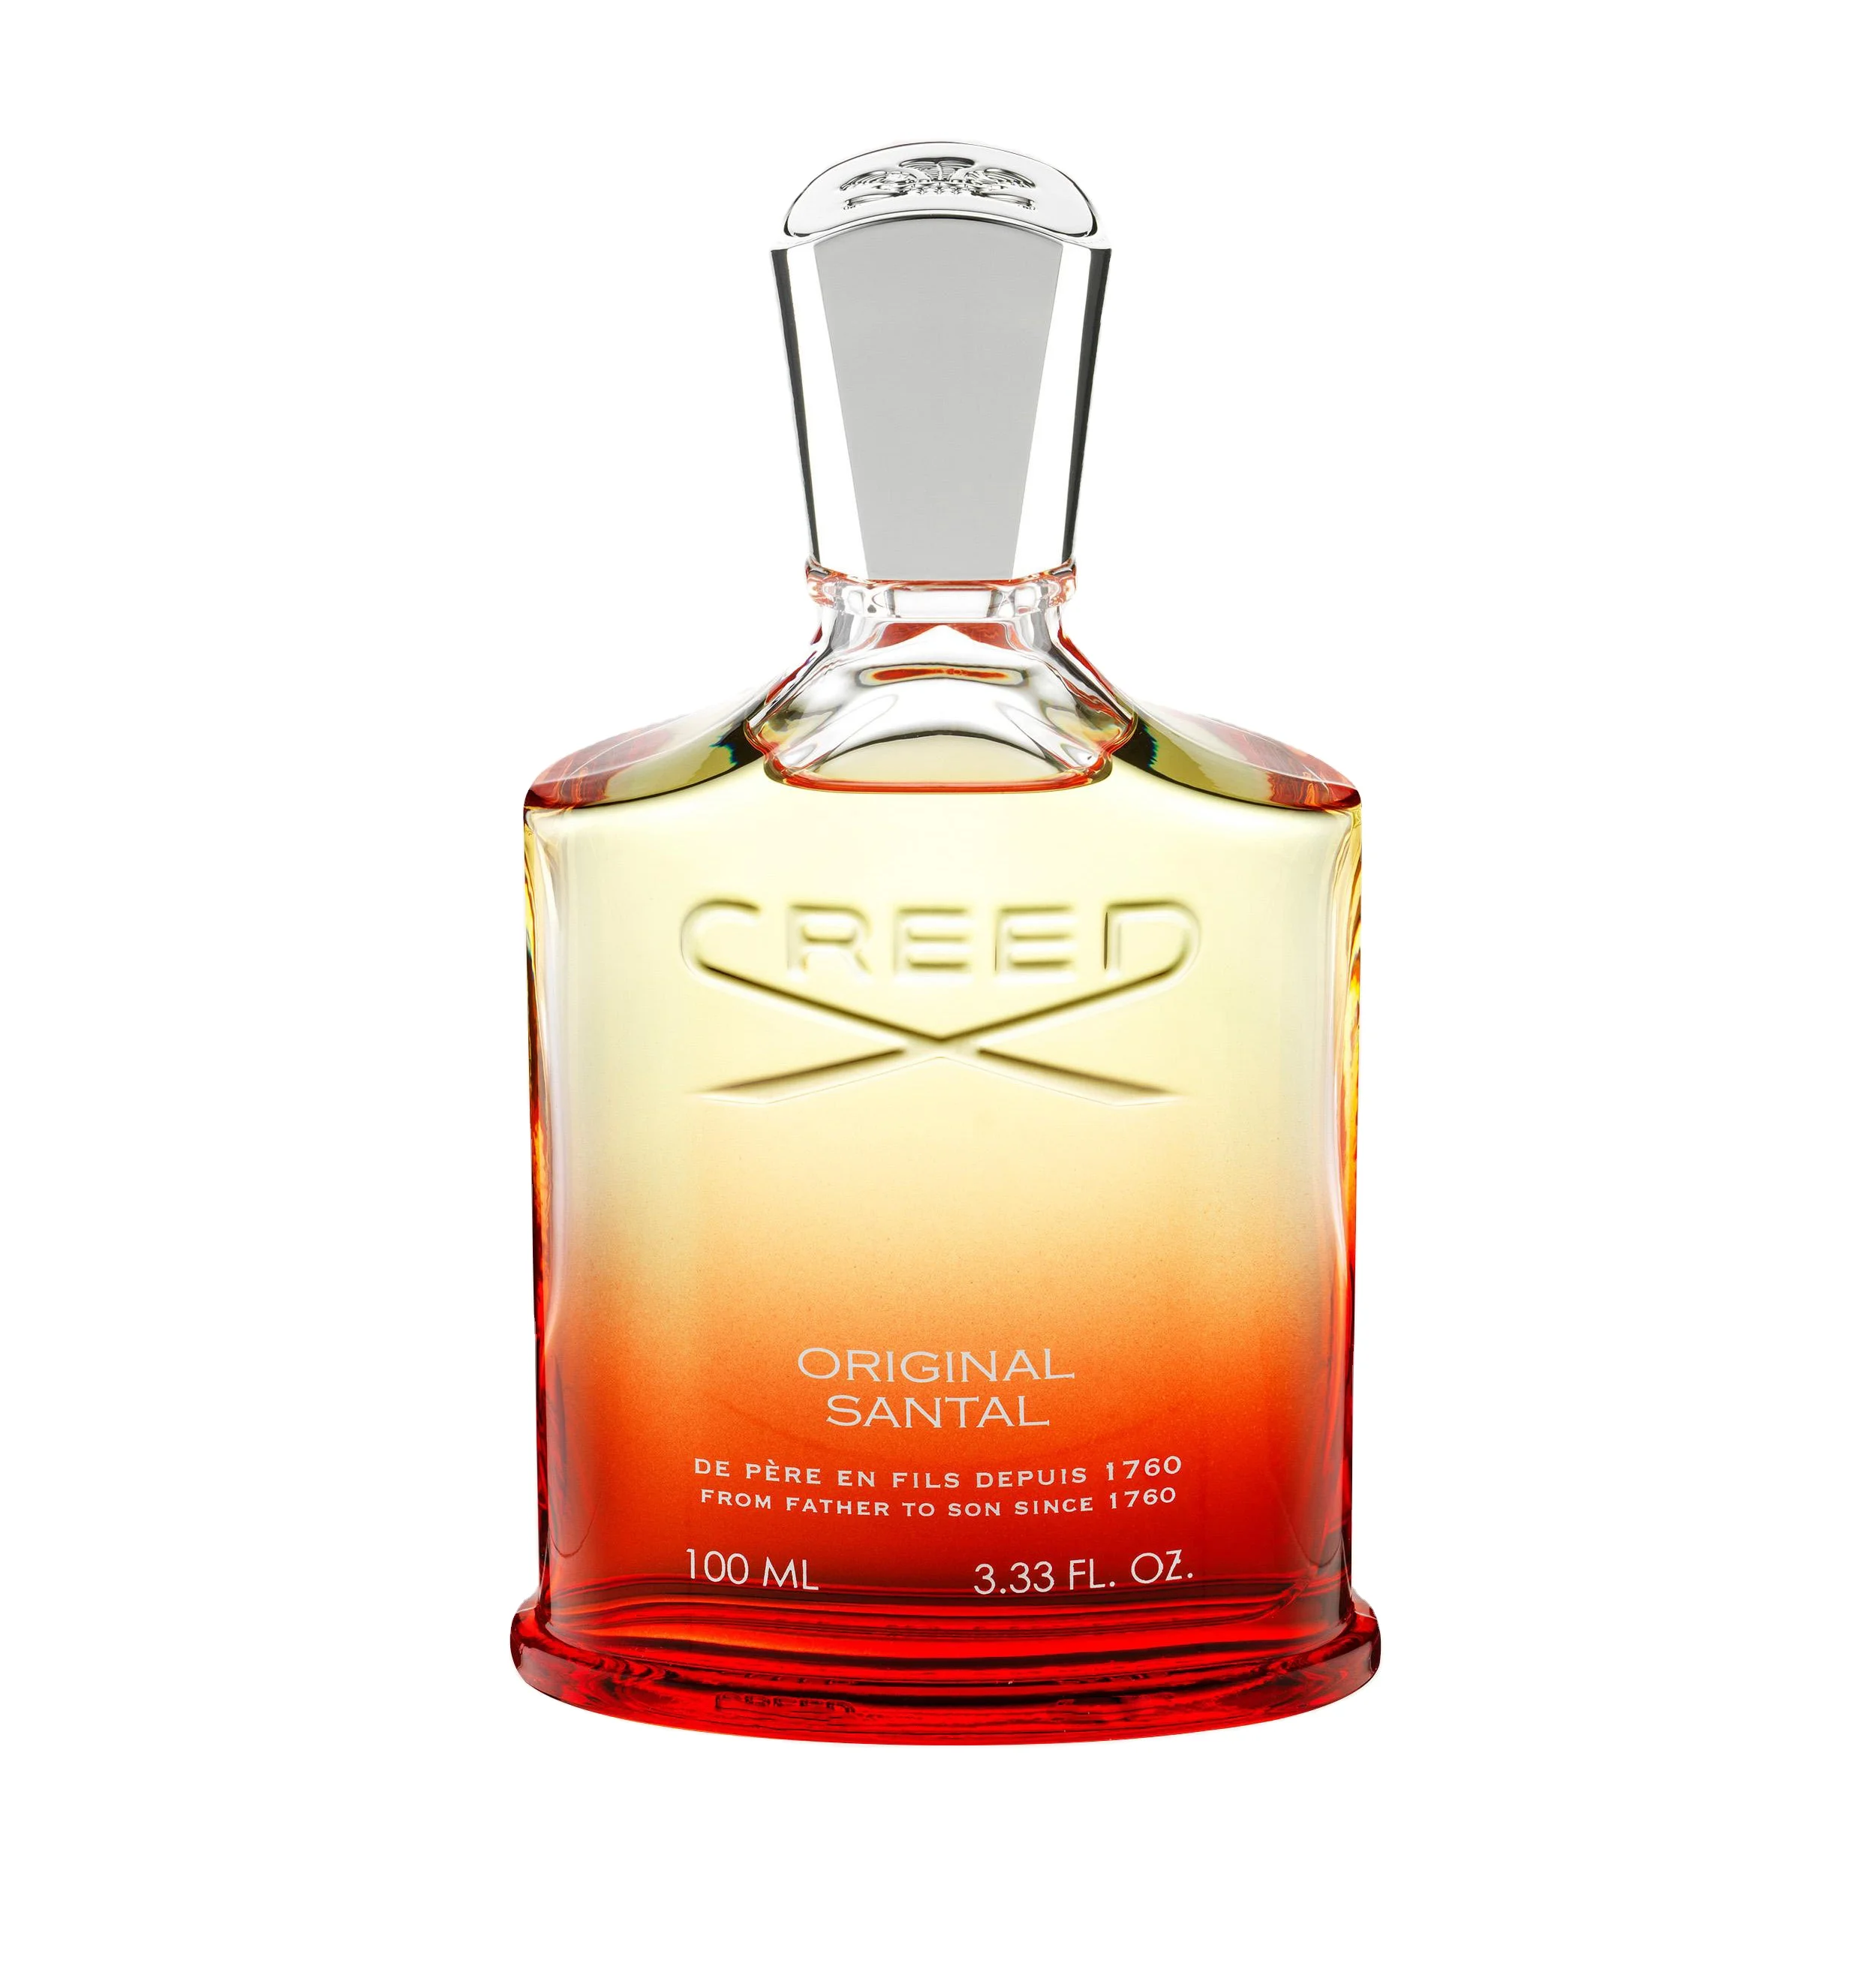 

NEW Creed Perfume Original Santal Eau de Parfum 75ml Fragrance Men Women Long Lasting Good Smell Perfume Luxury Brand